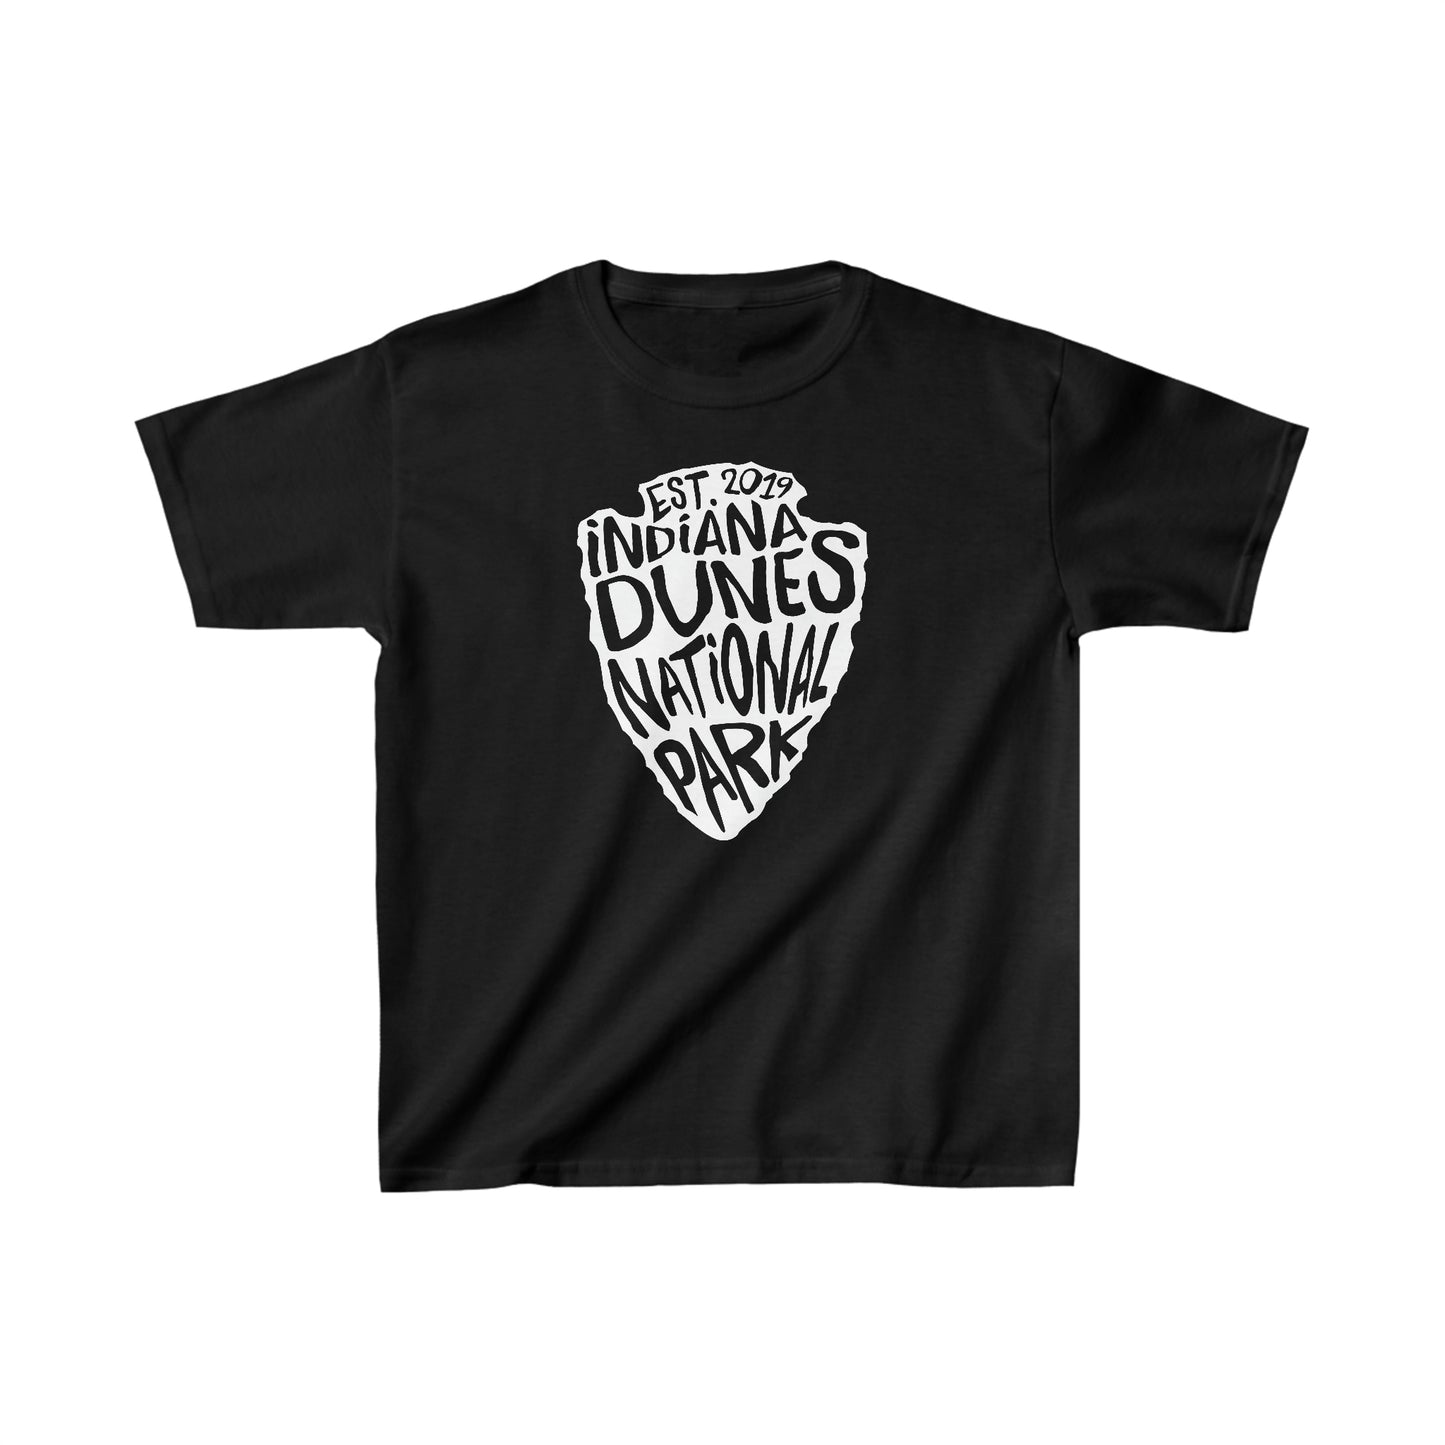 Indiana Dunes National Park Child T-Shirt - Arrowhead Design